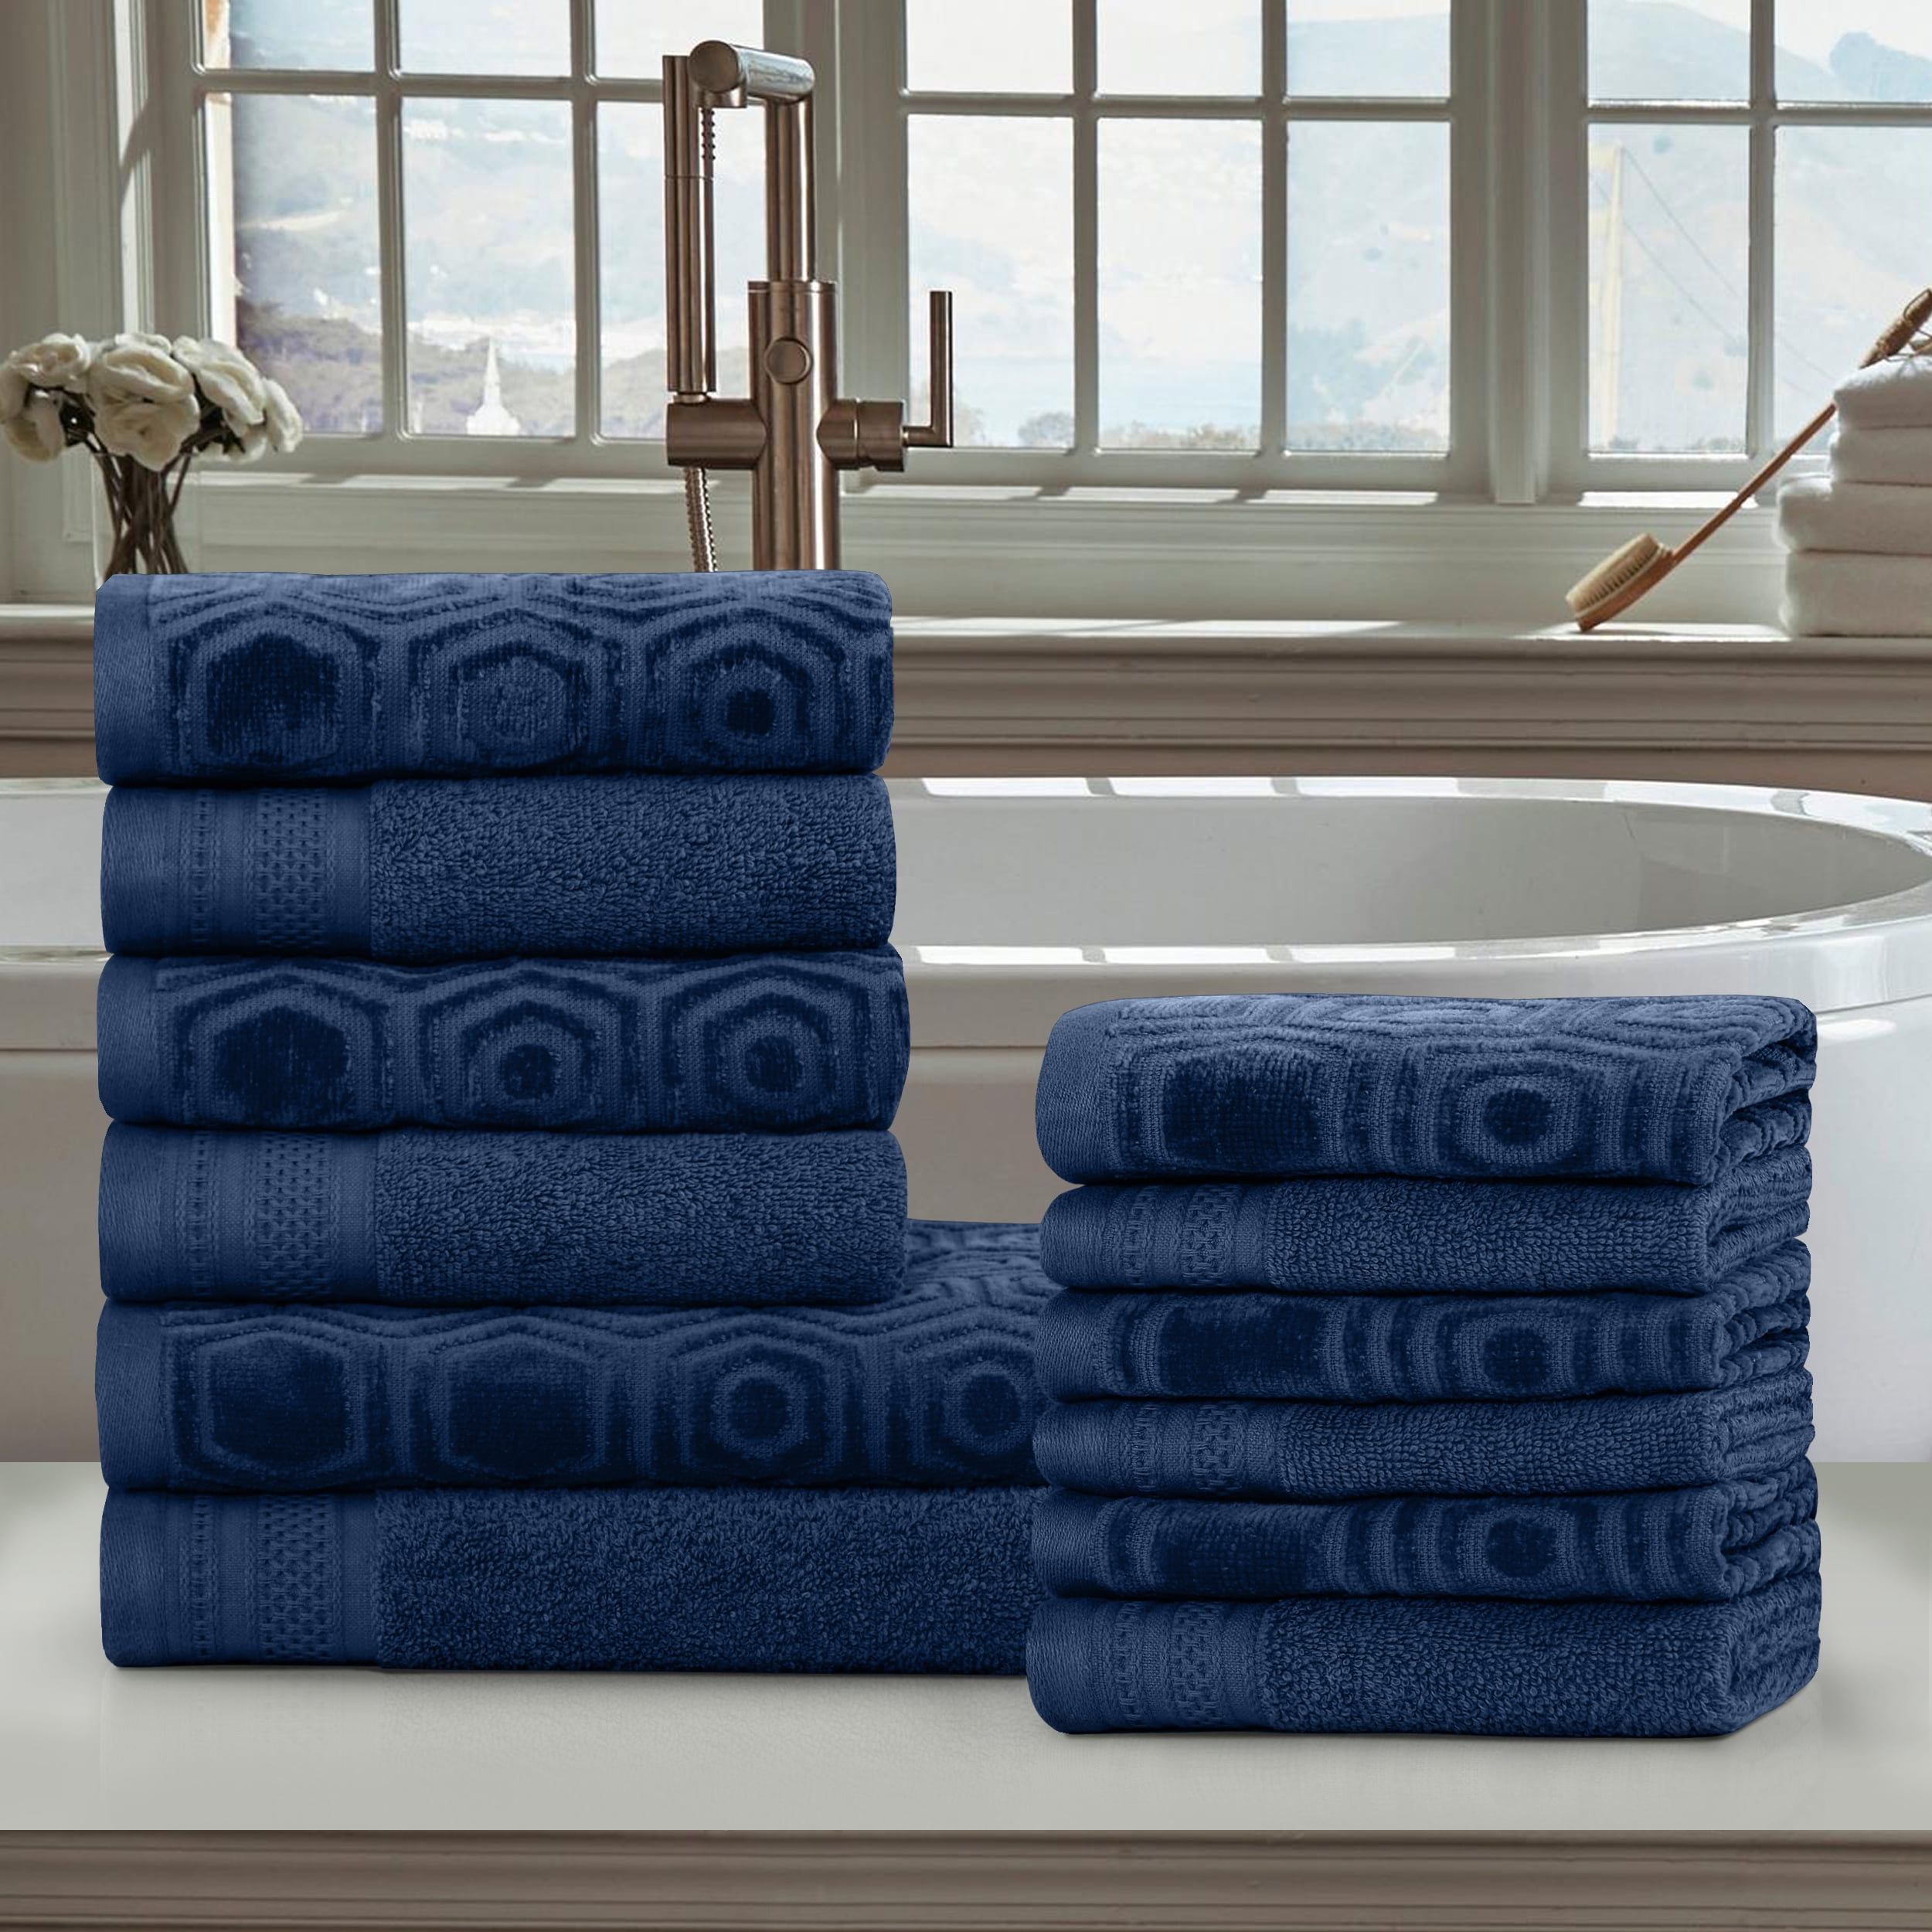 Reluen Cotton Huck Towels Blue 15 X 25 - Pack of 12 Pcs